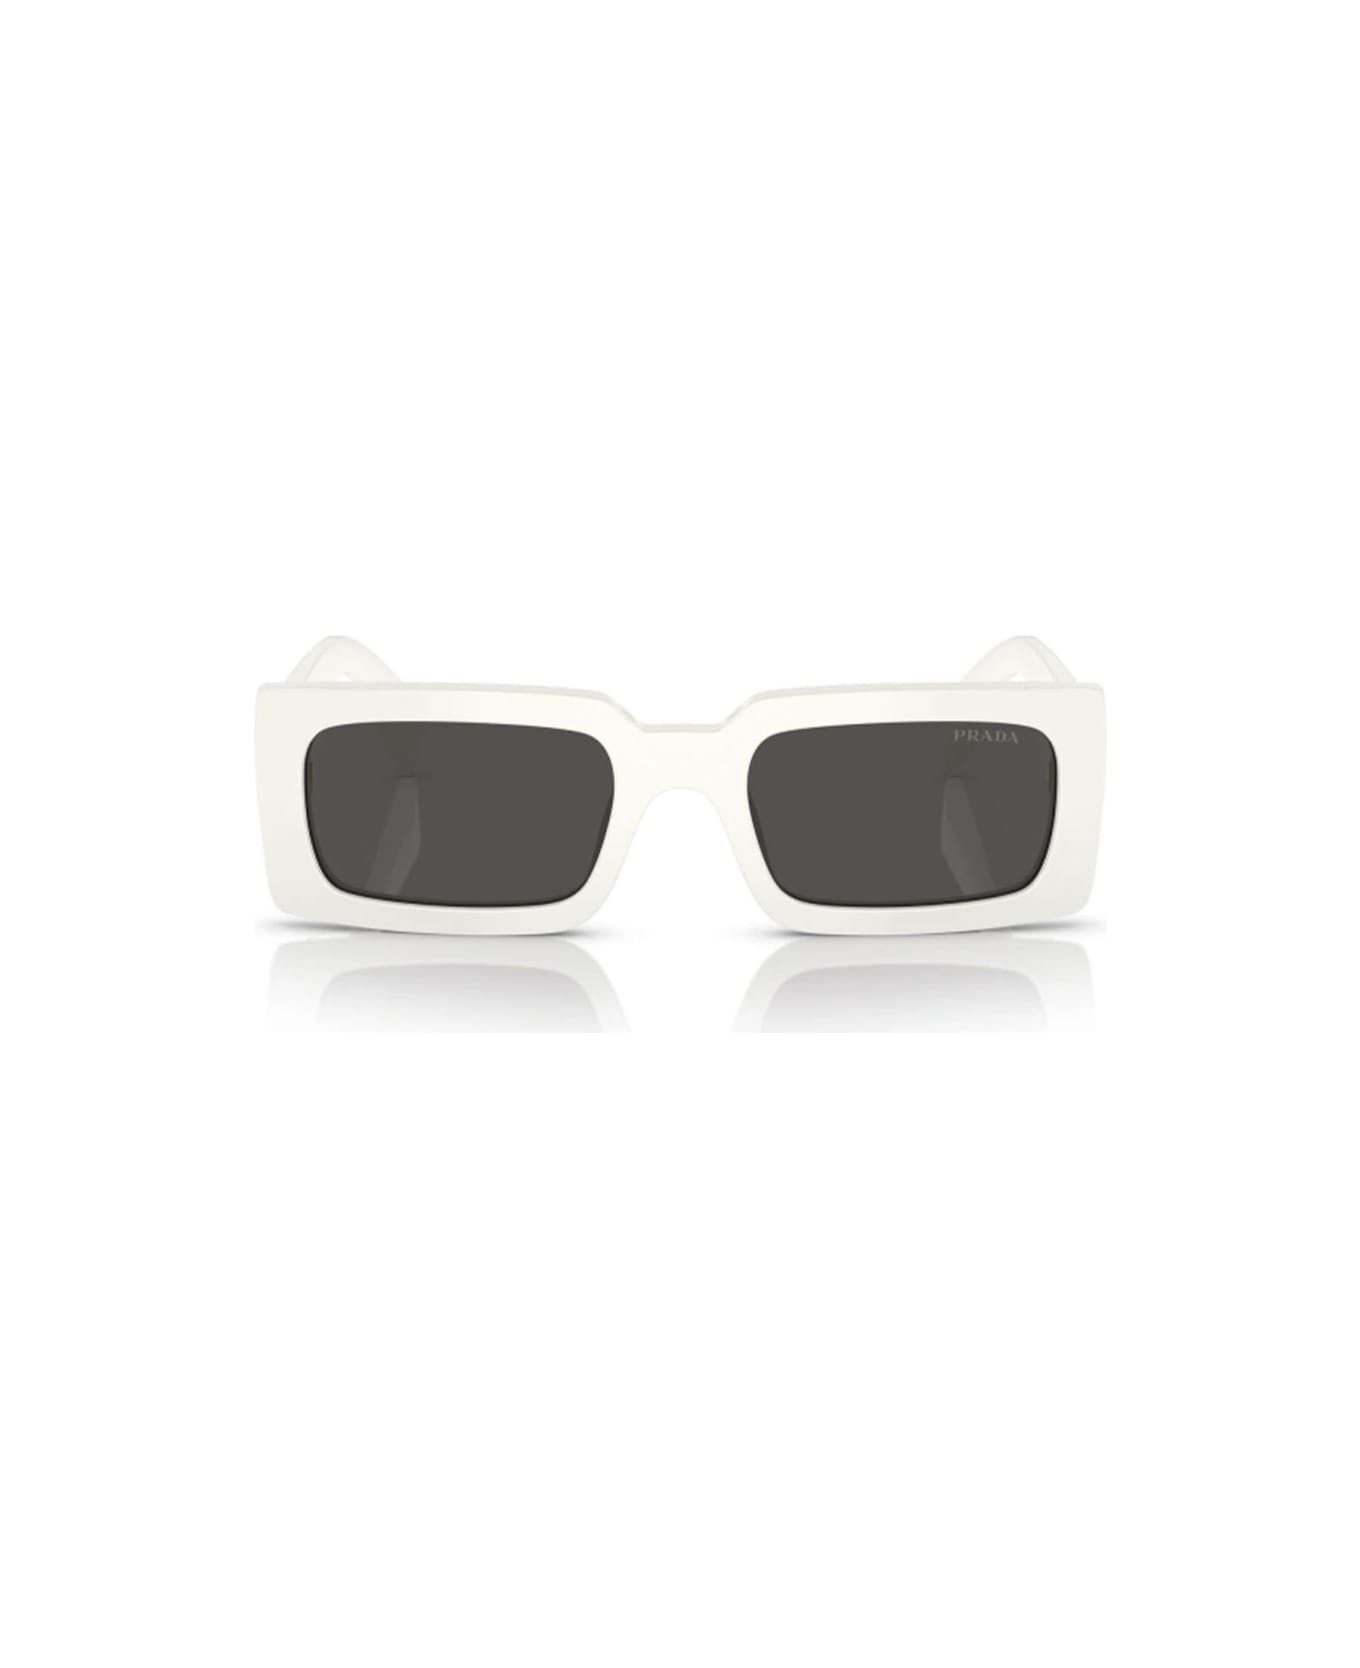 Prada Eyewear Eyewear - Bianco/Grigio アイウェア